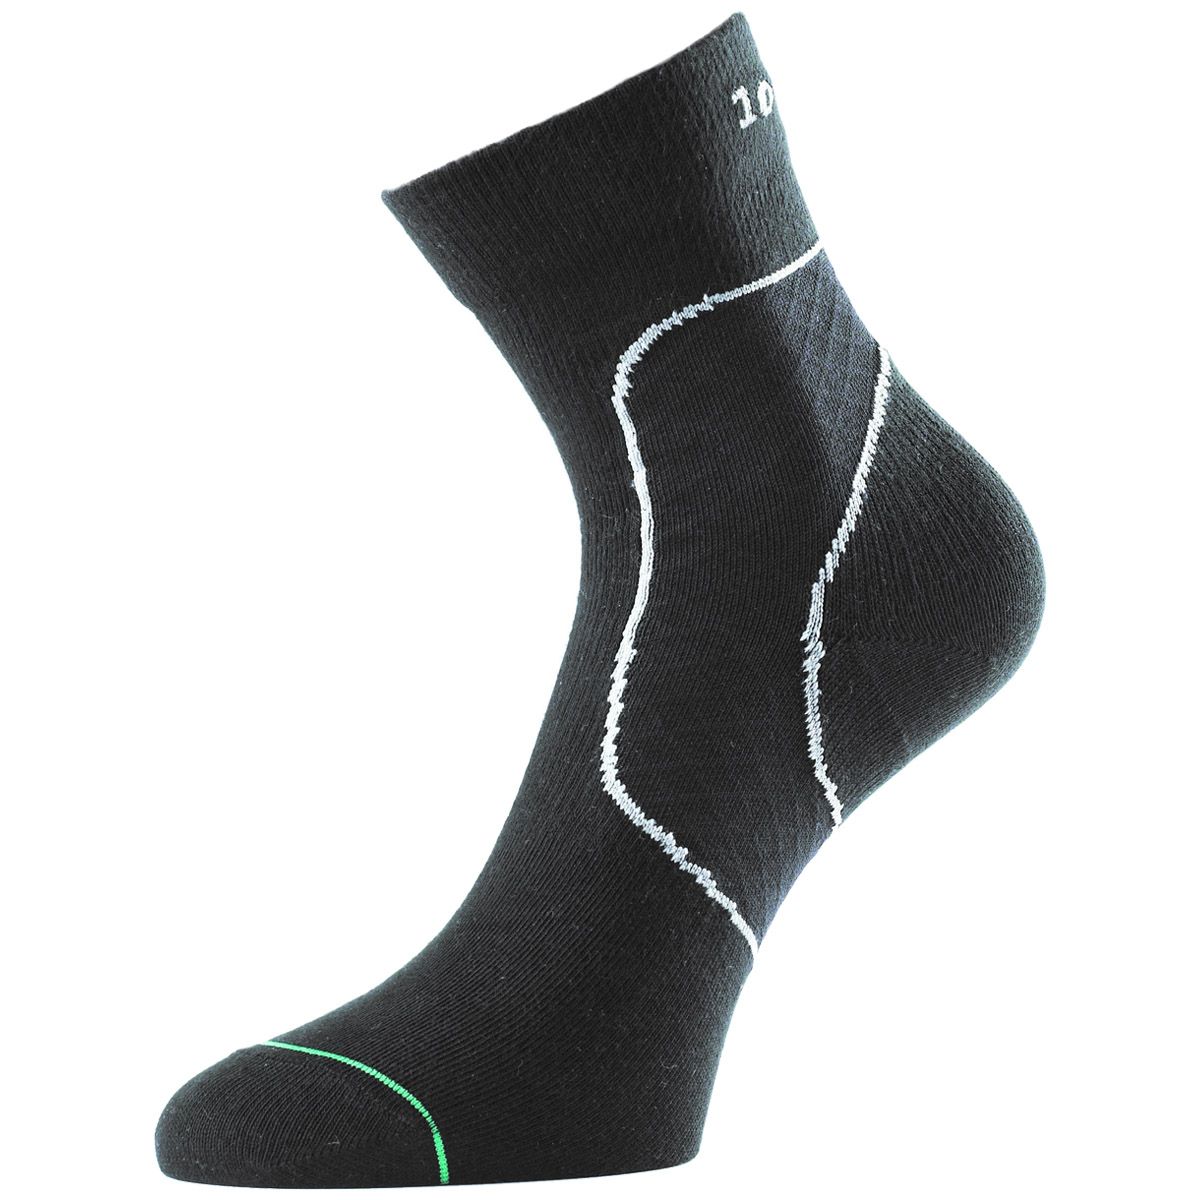 Support Sock - Black - 